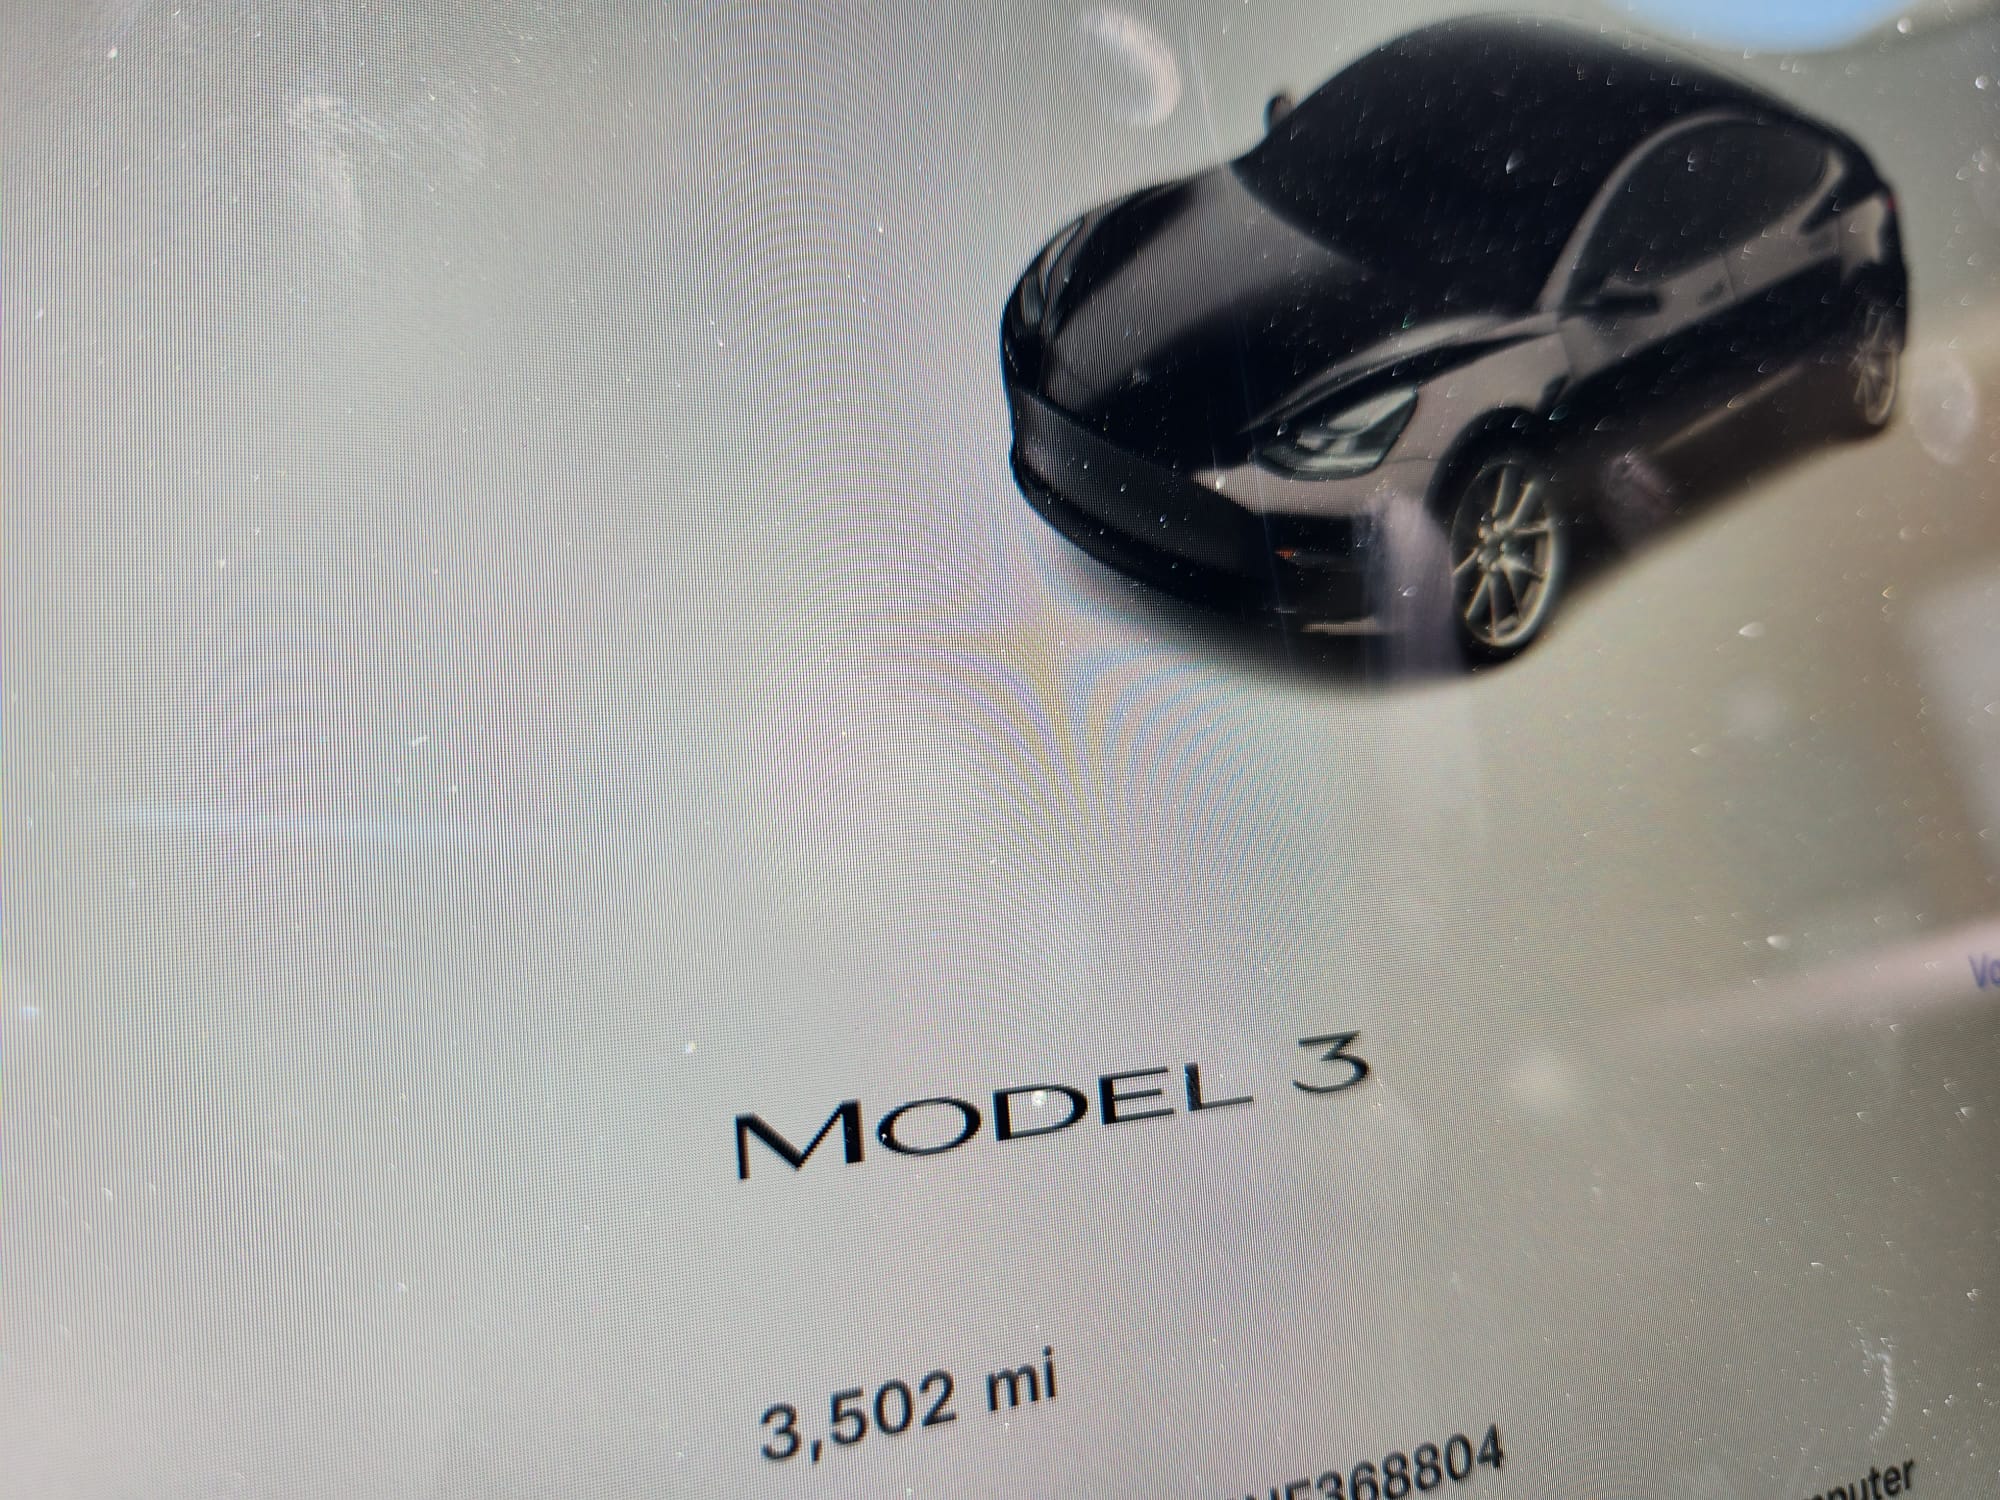 Tesla Model 3 Standart Range CLEAN TITLE 2022!!!!